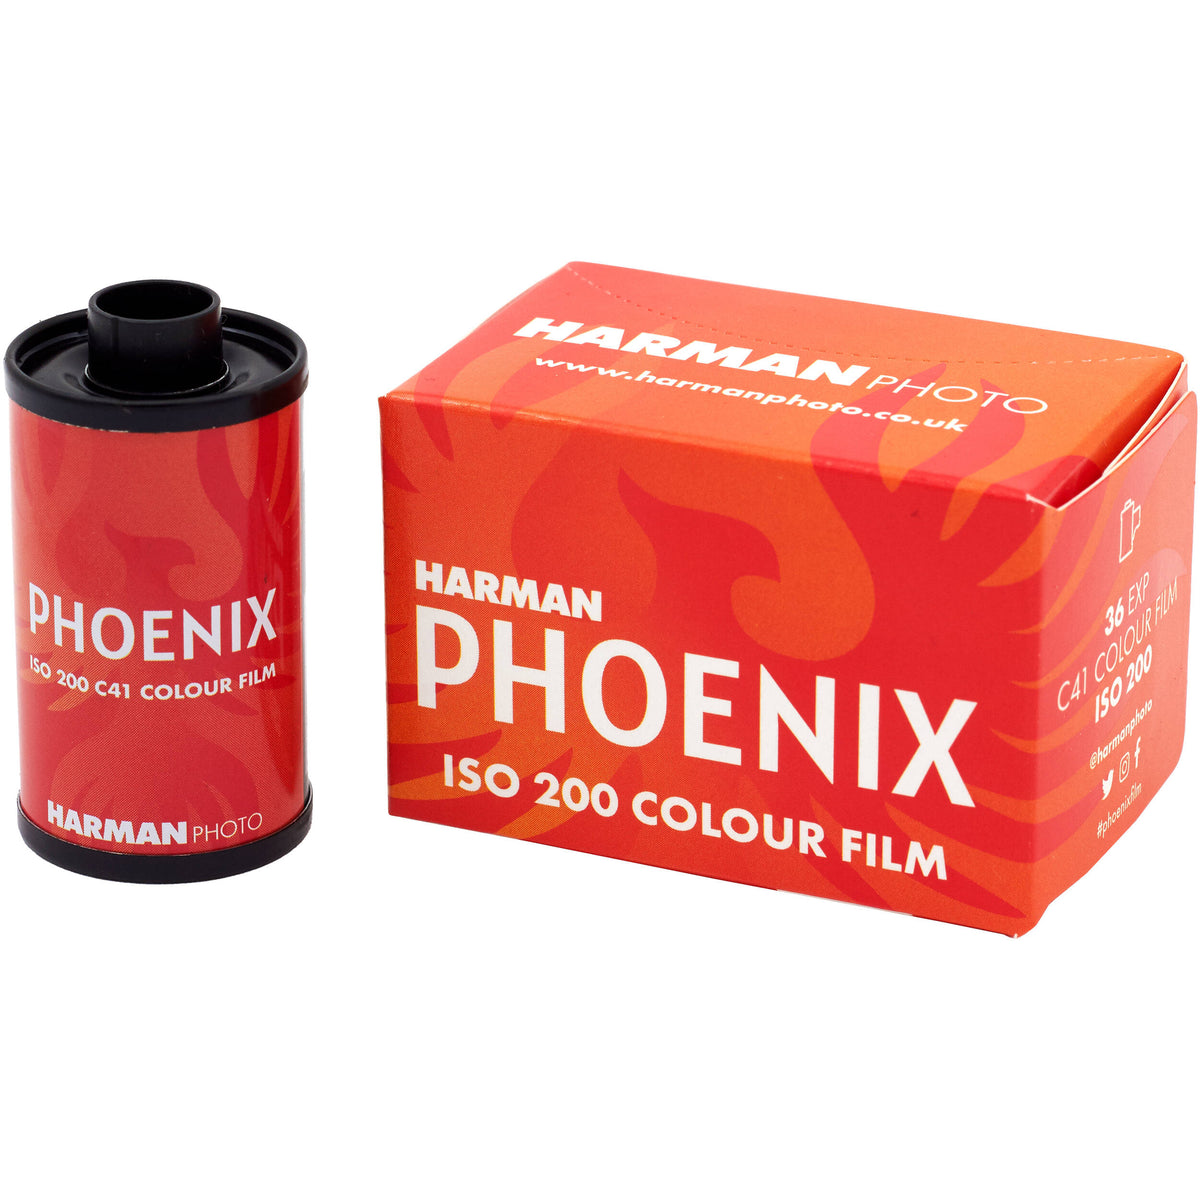 Harman Phoenix 200 35mm Color Film -36 exp.-